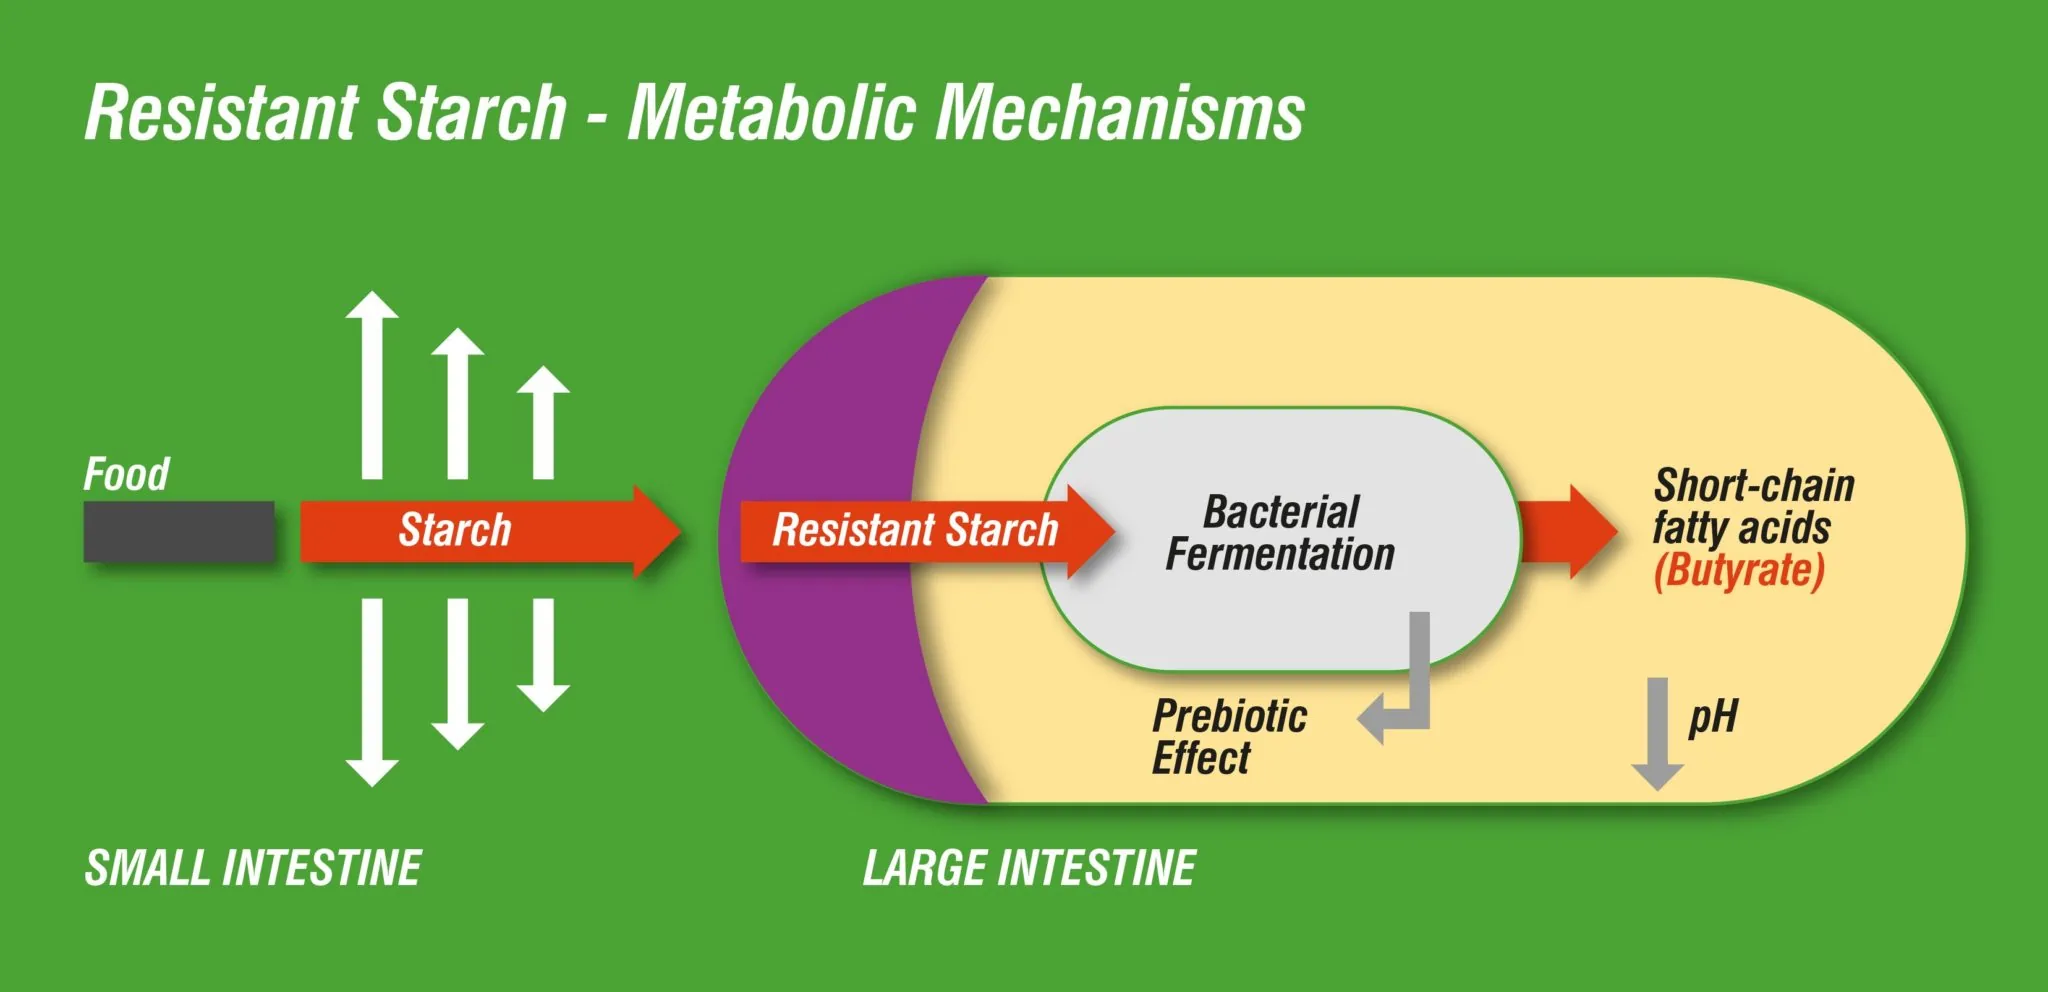 Resistant Starch - Metabolic Mechanisms